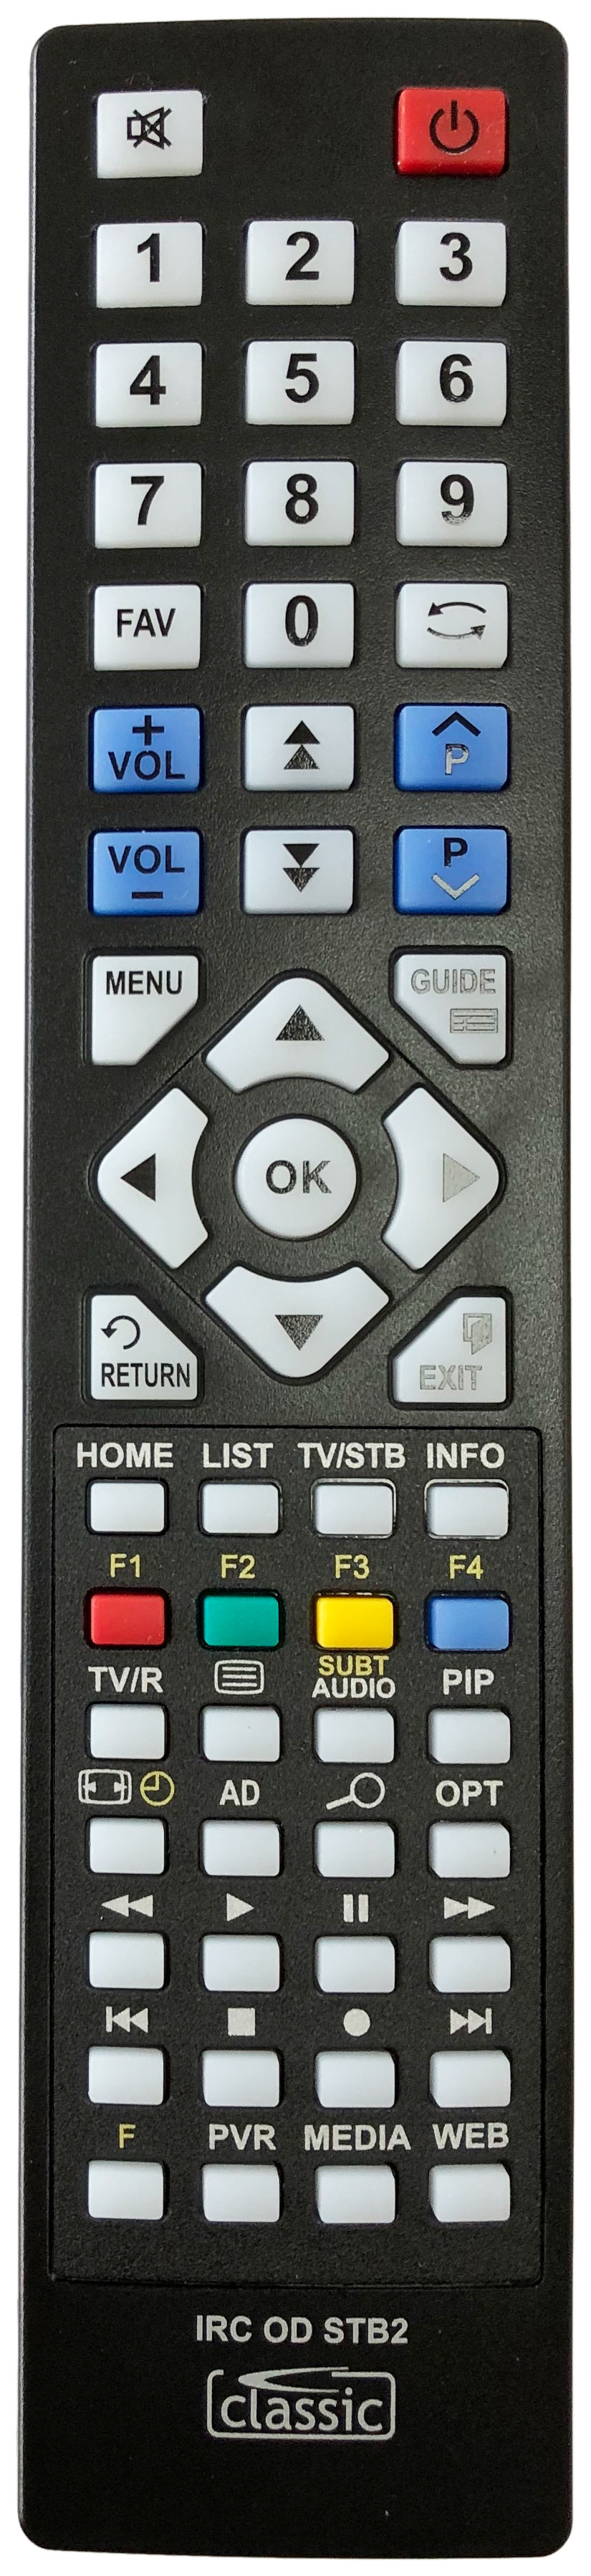 HUMAX RM-G07 Remote Control